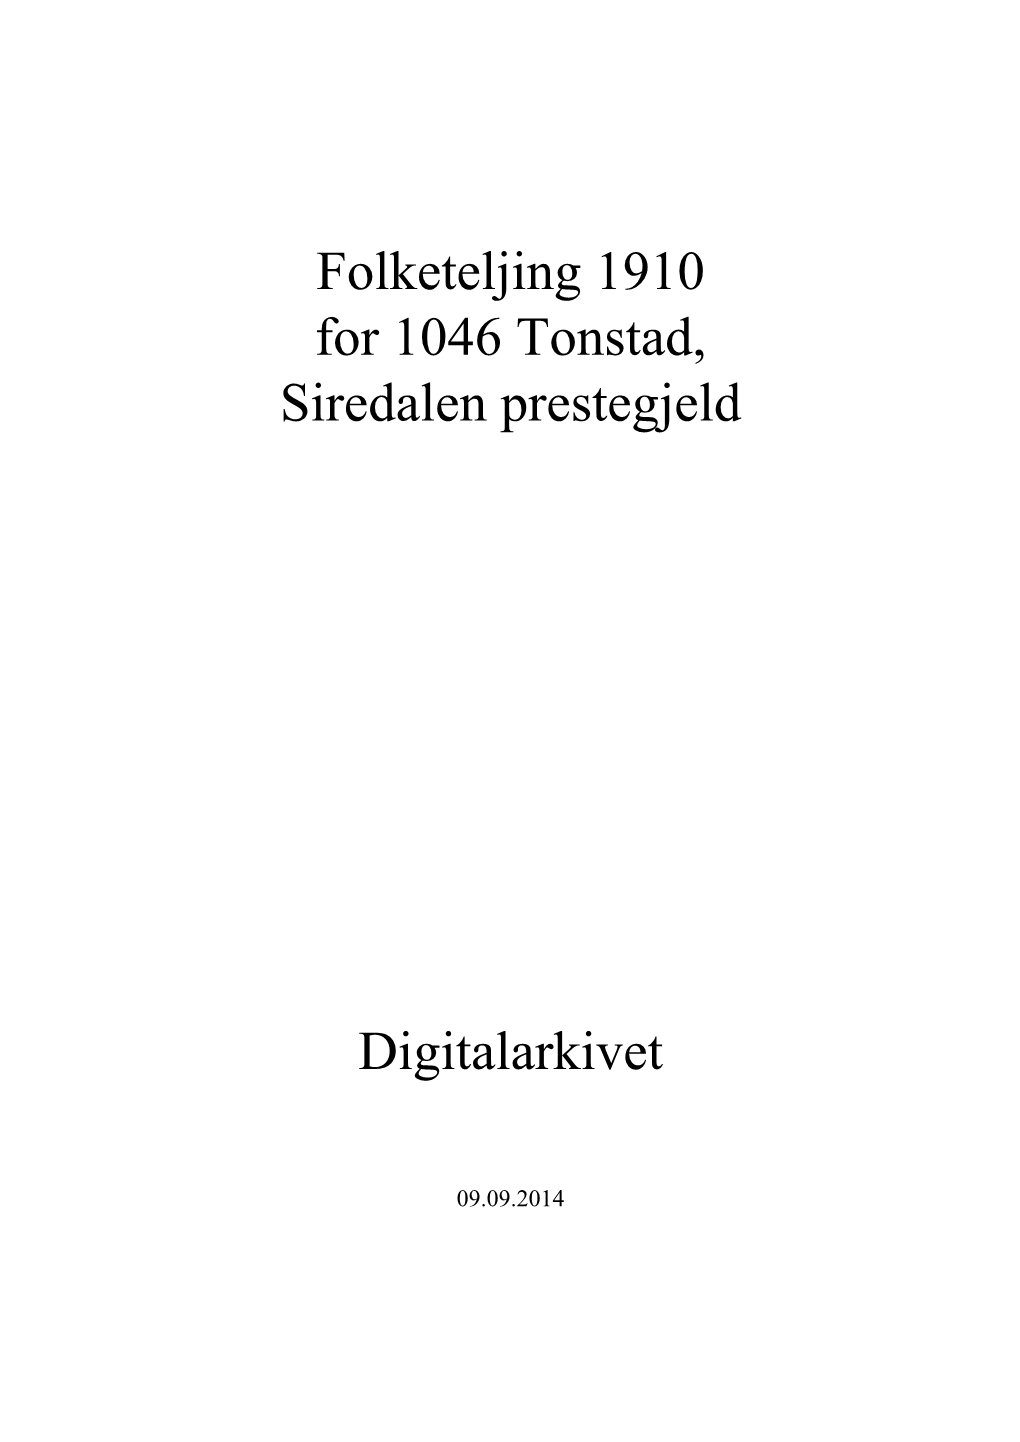 1046 Tonstad, Siredalen Prestegjeld